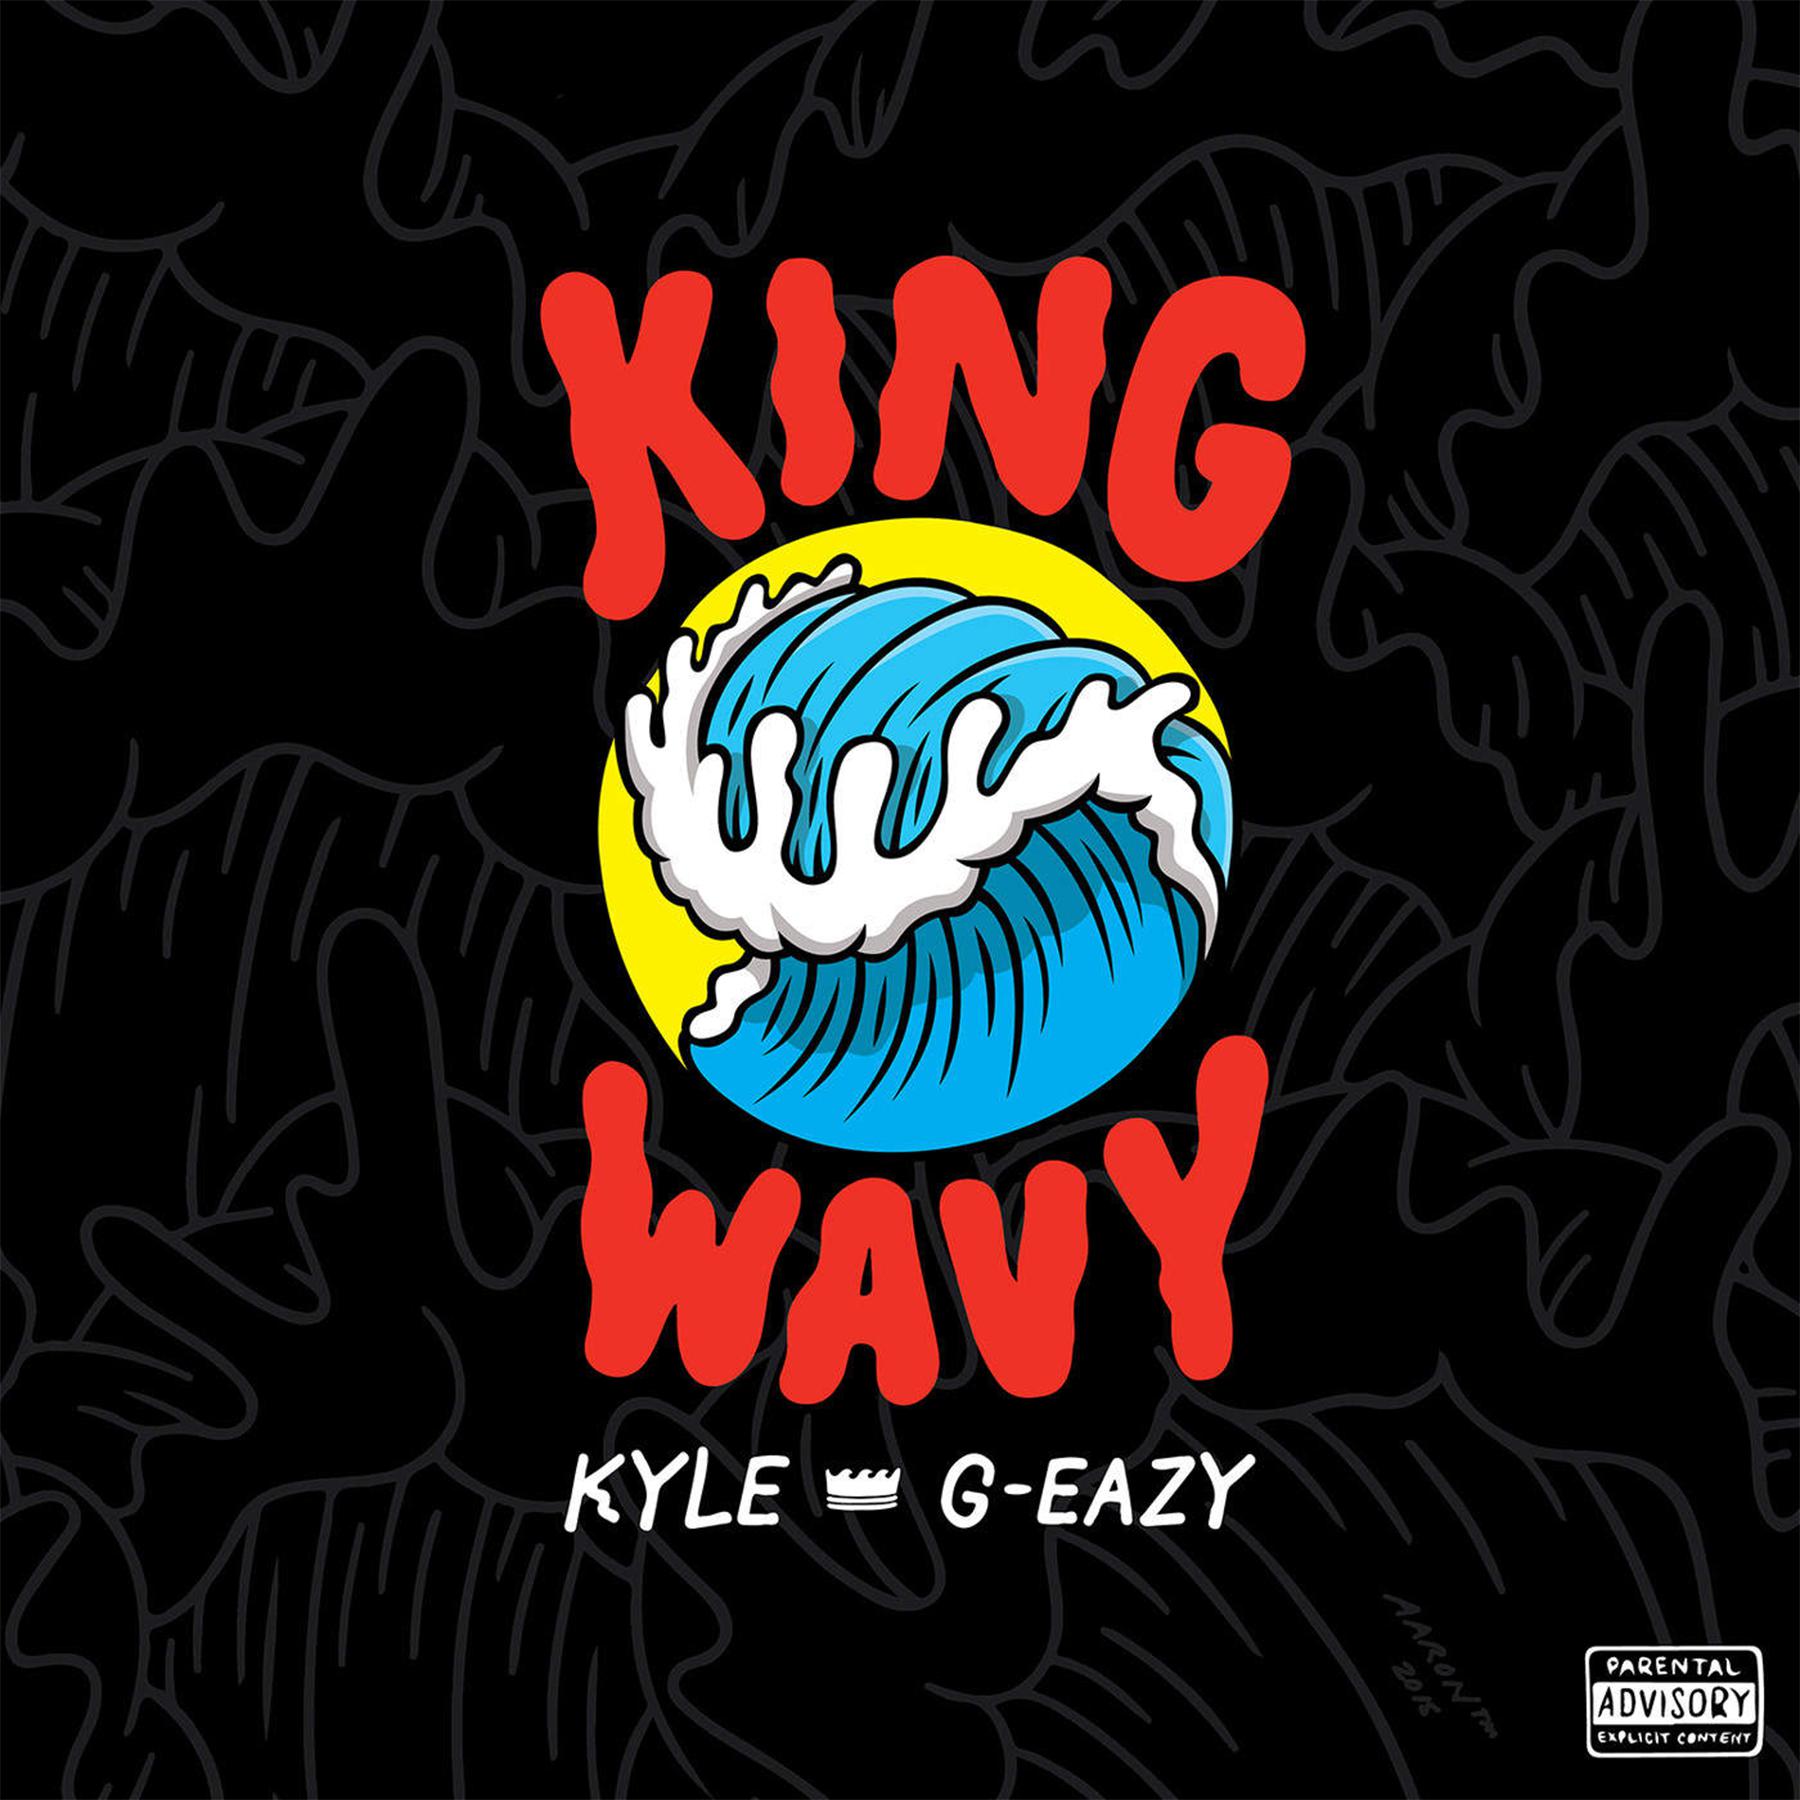 King Wavy (feat. G-Eazy)